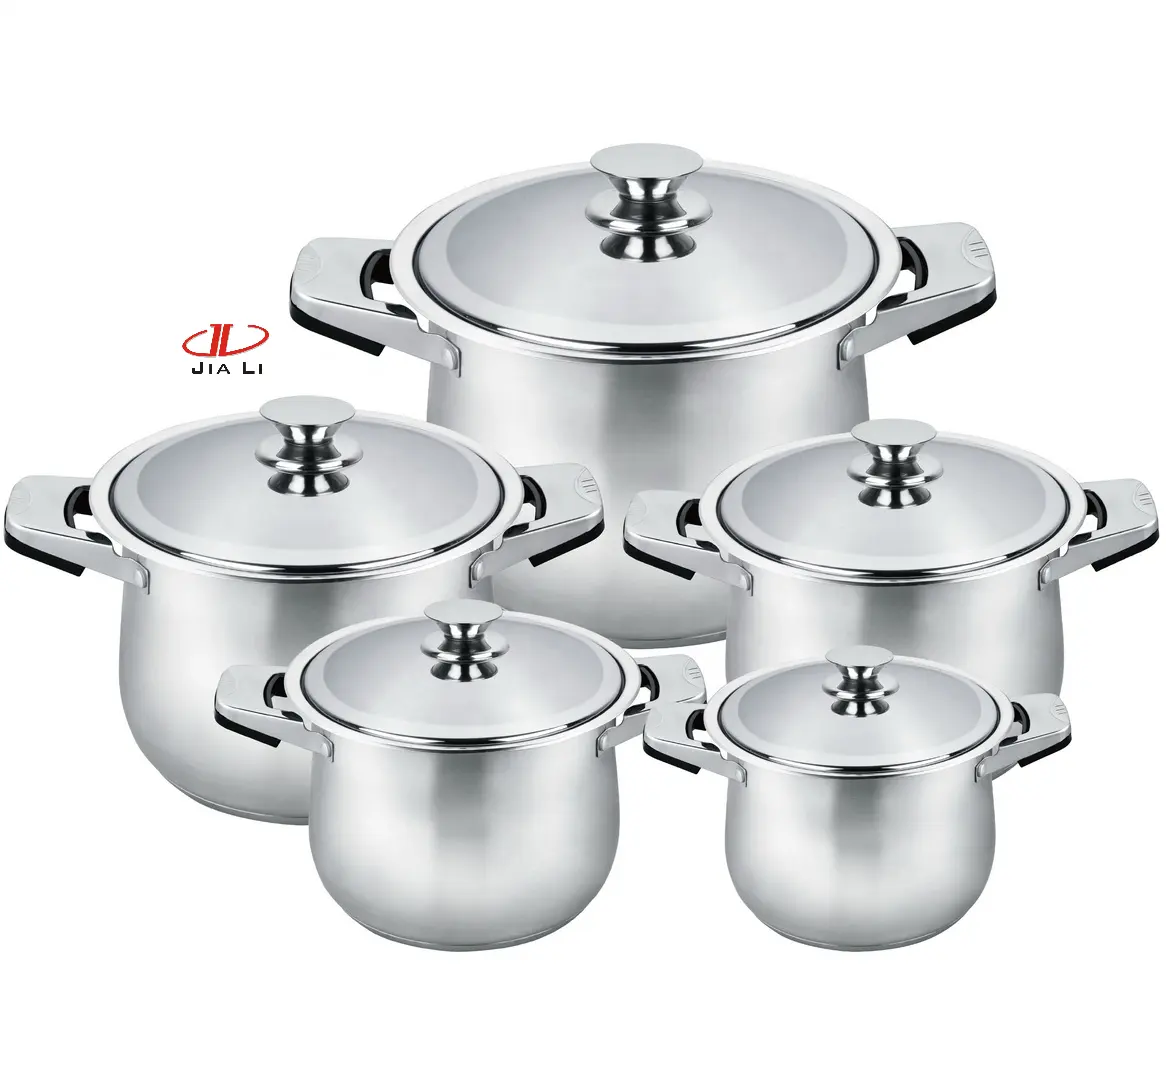 Jiali good price High quality pots and pans cooking pot set Soup & Stock Pots